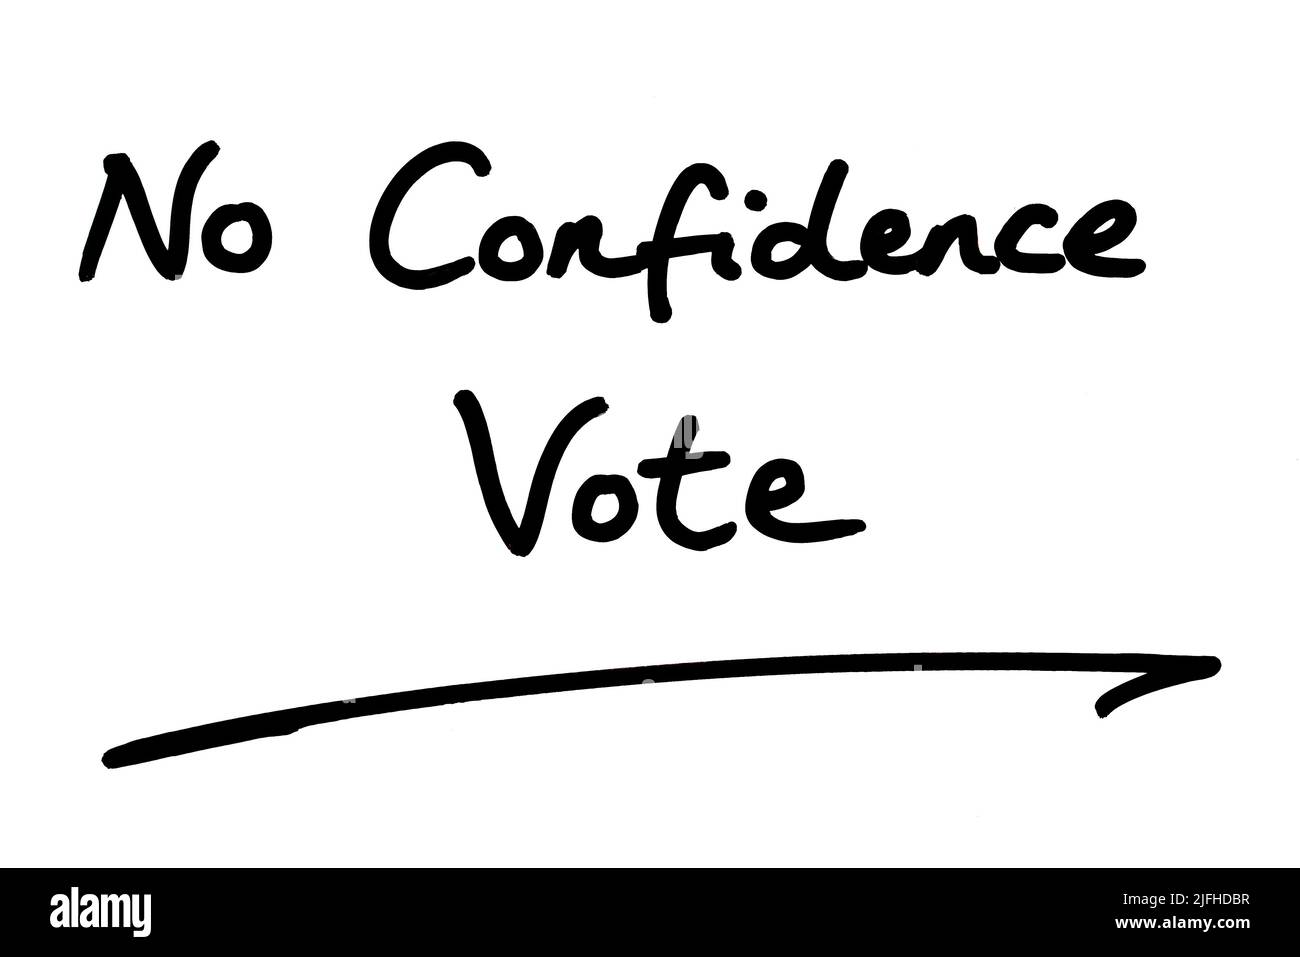 No Confidence Vote, handwritten on a white background. Stock Photo